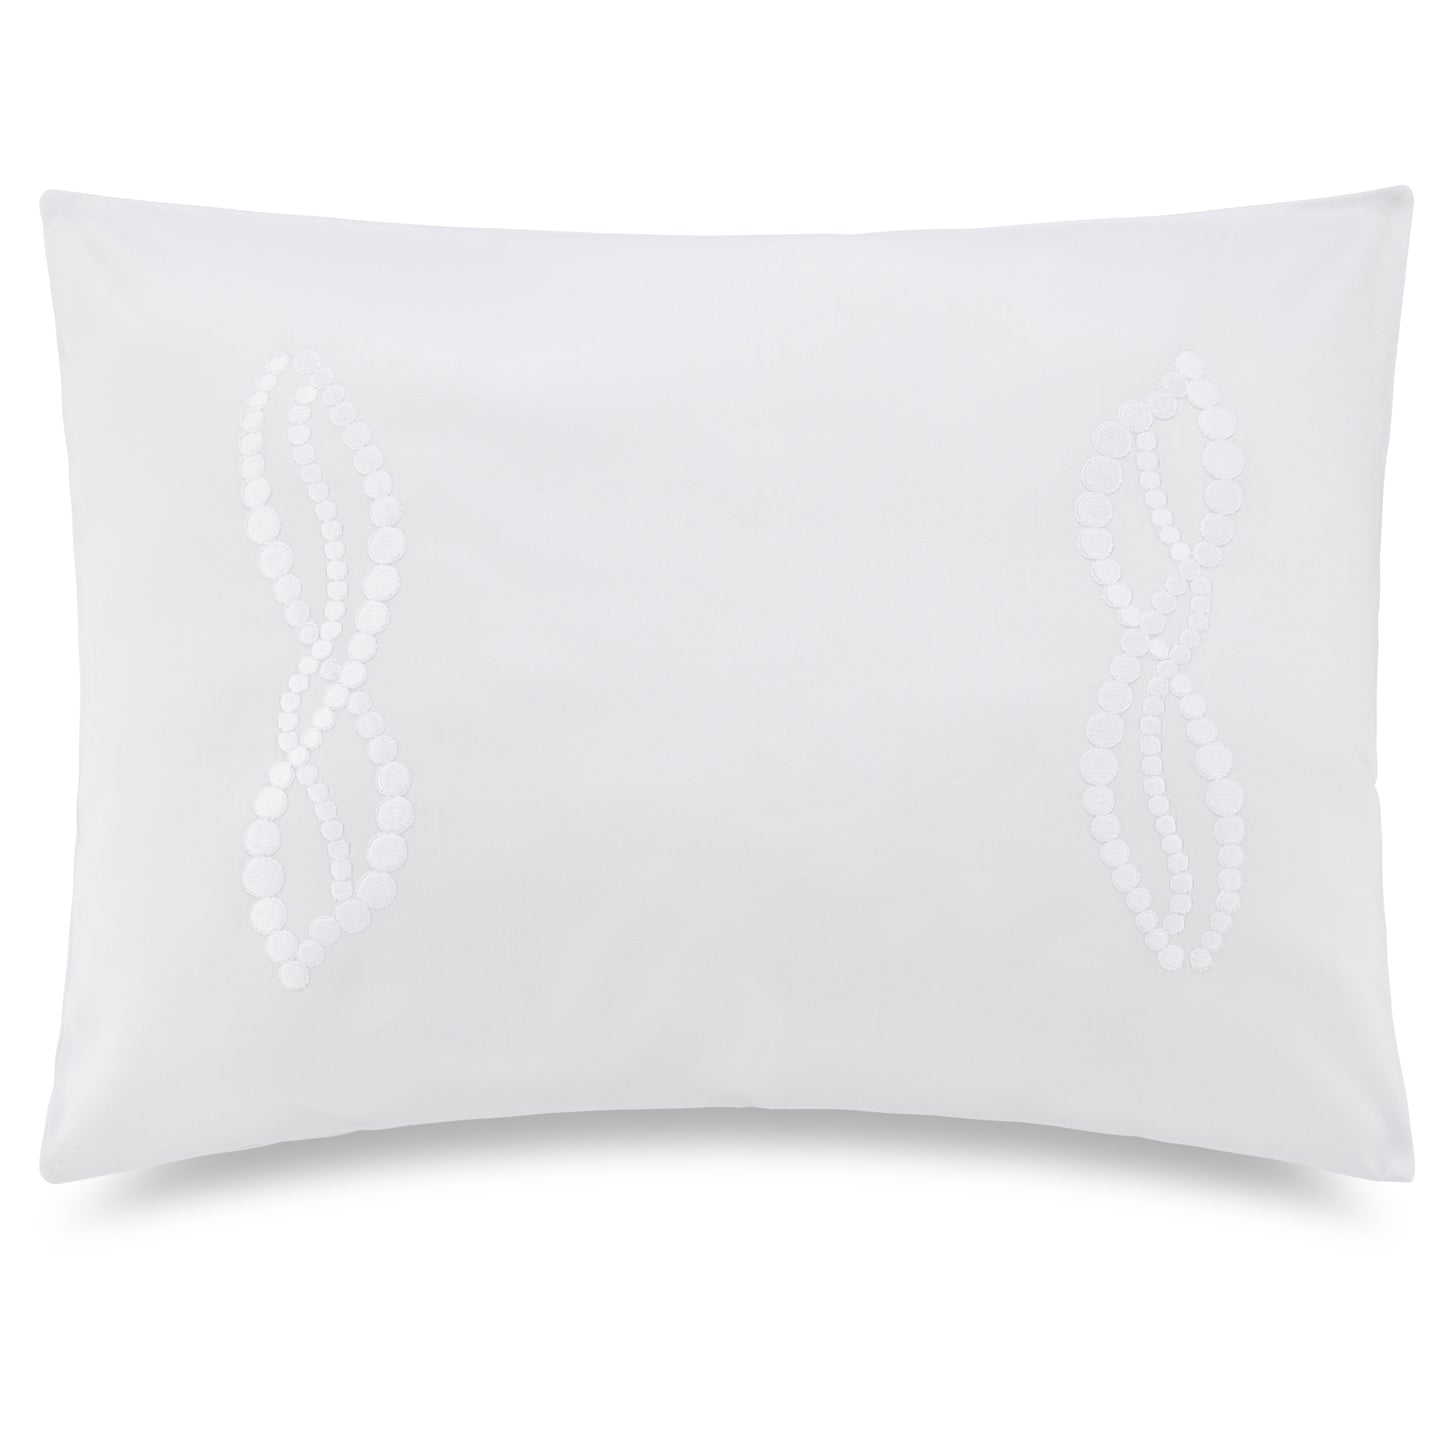 Platinum Rope Boudoir Pillow Cover